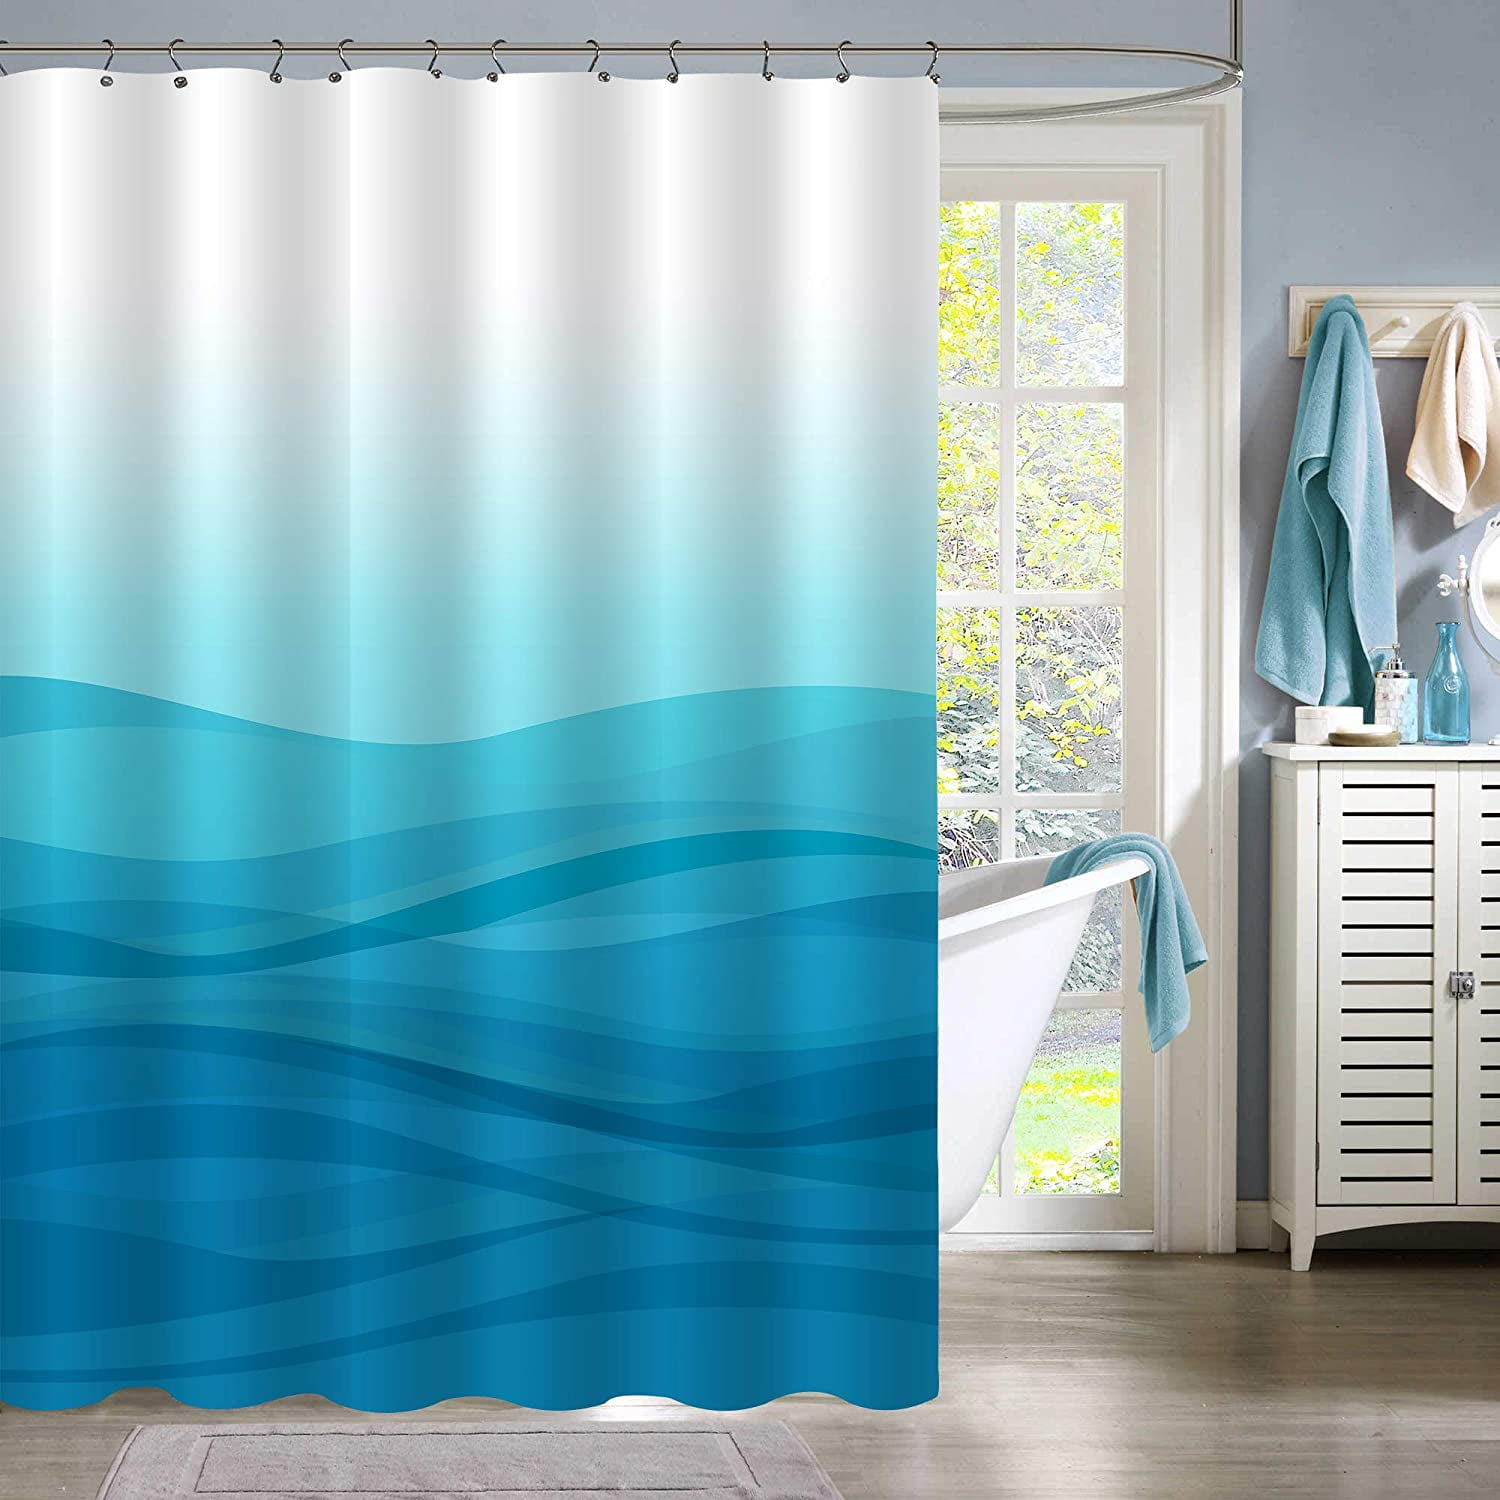 Seaside Holiday Waterproof Bath Polyester Shower Curtain Liner Water Resistant 